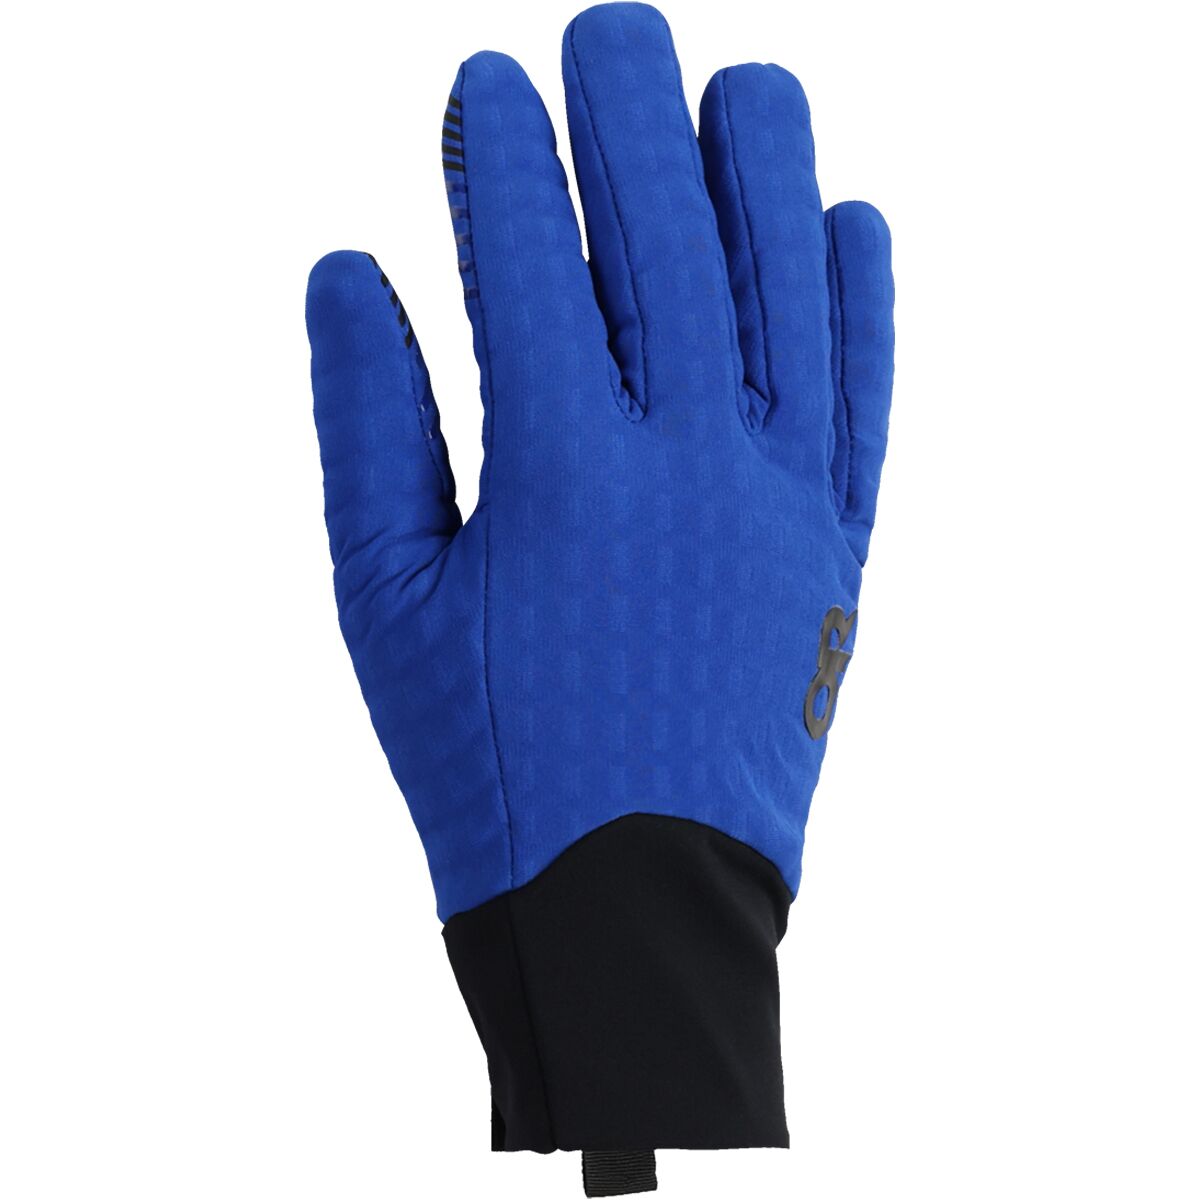 Outdoor Research Vigor Heavyweight Sensor Glove - Men's Topaz